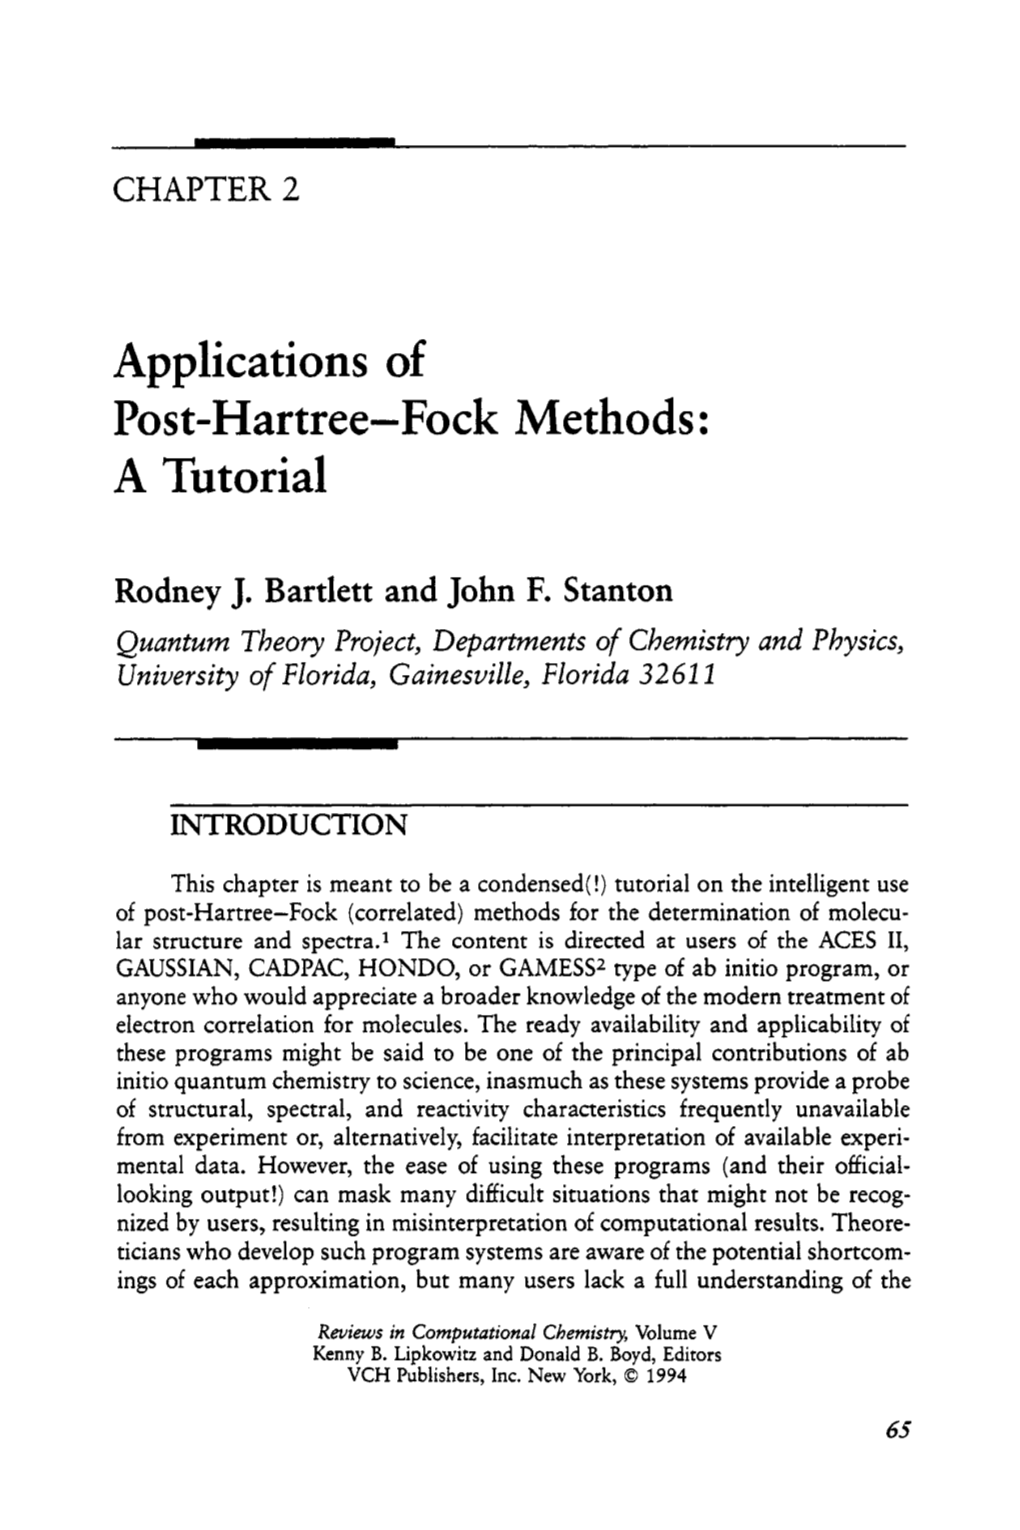 Applications of Post-Hartree-Fock Methods: a Tutorial